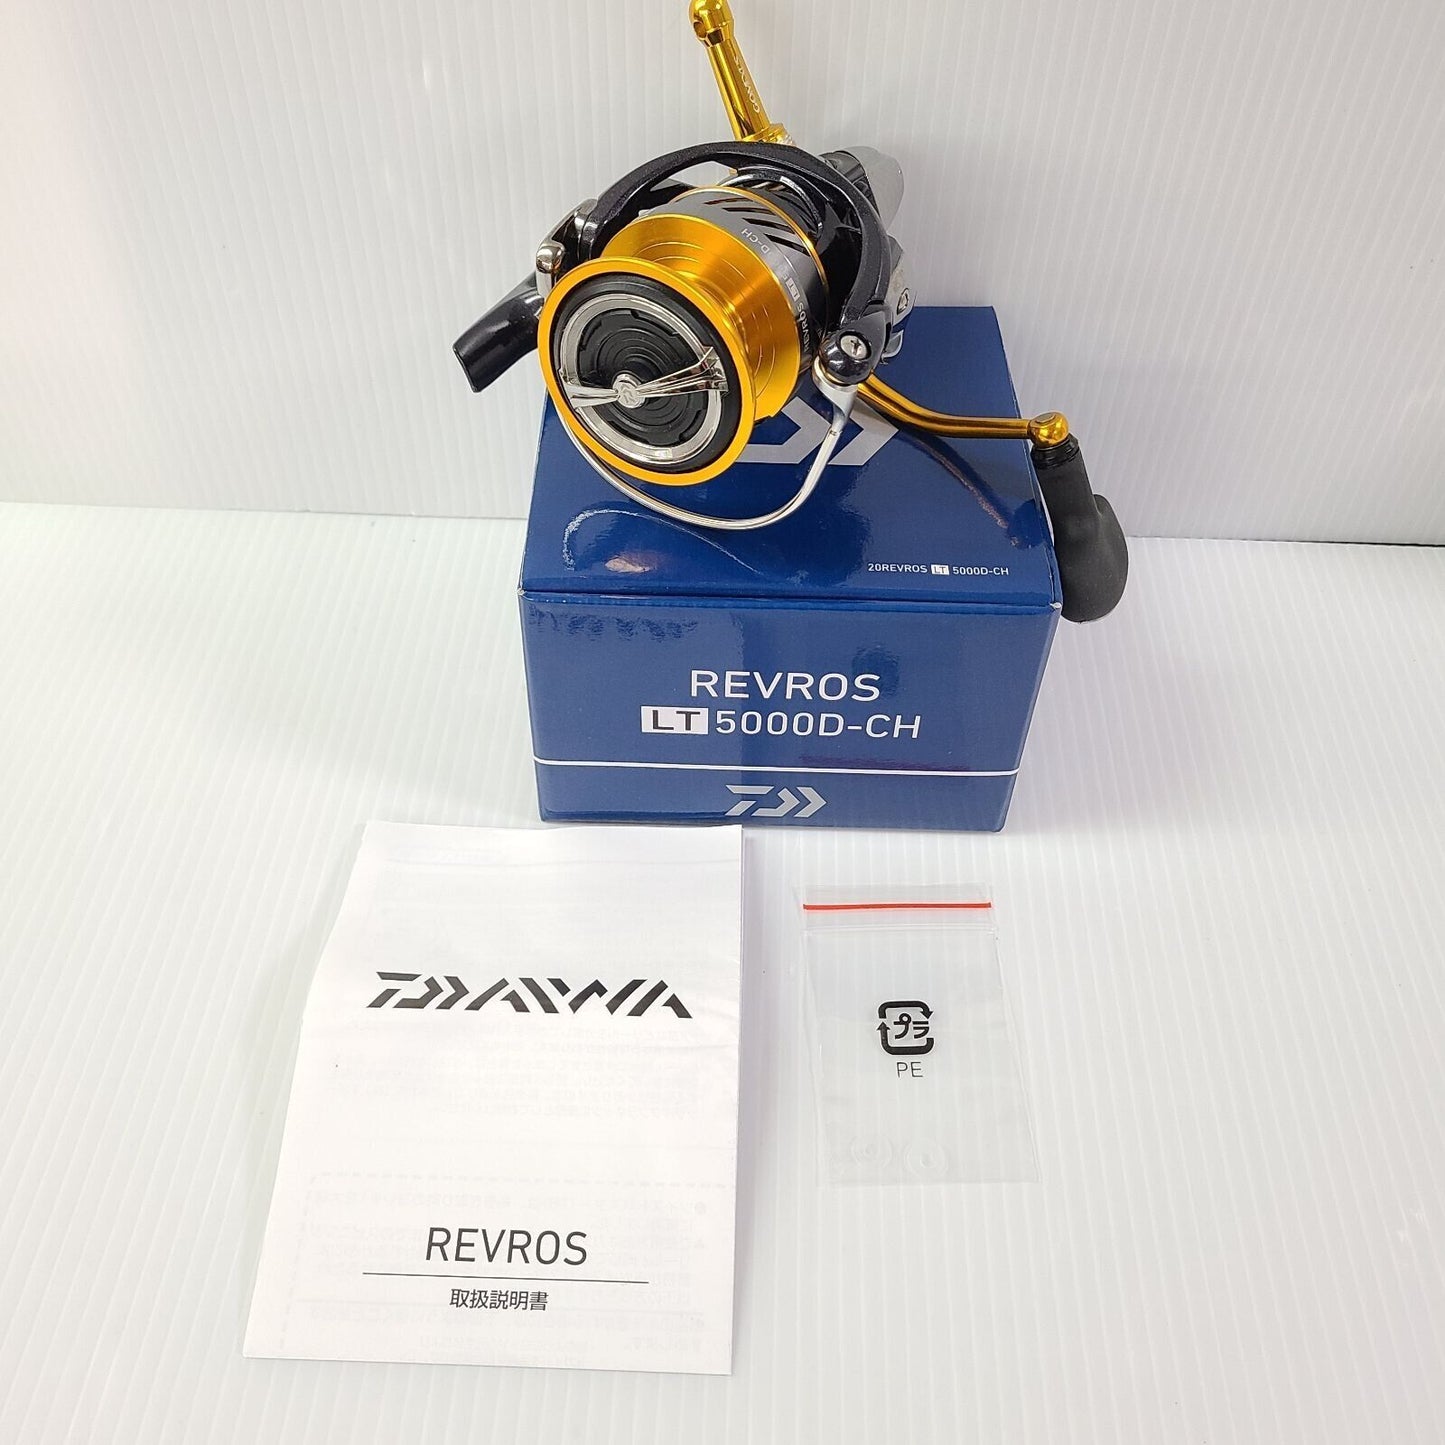 Daiwa 20 Revros LT5000D-CH Spinning Reel Gear Ratio 5.6:1 Free Shipping from JP